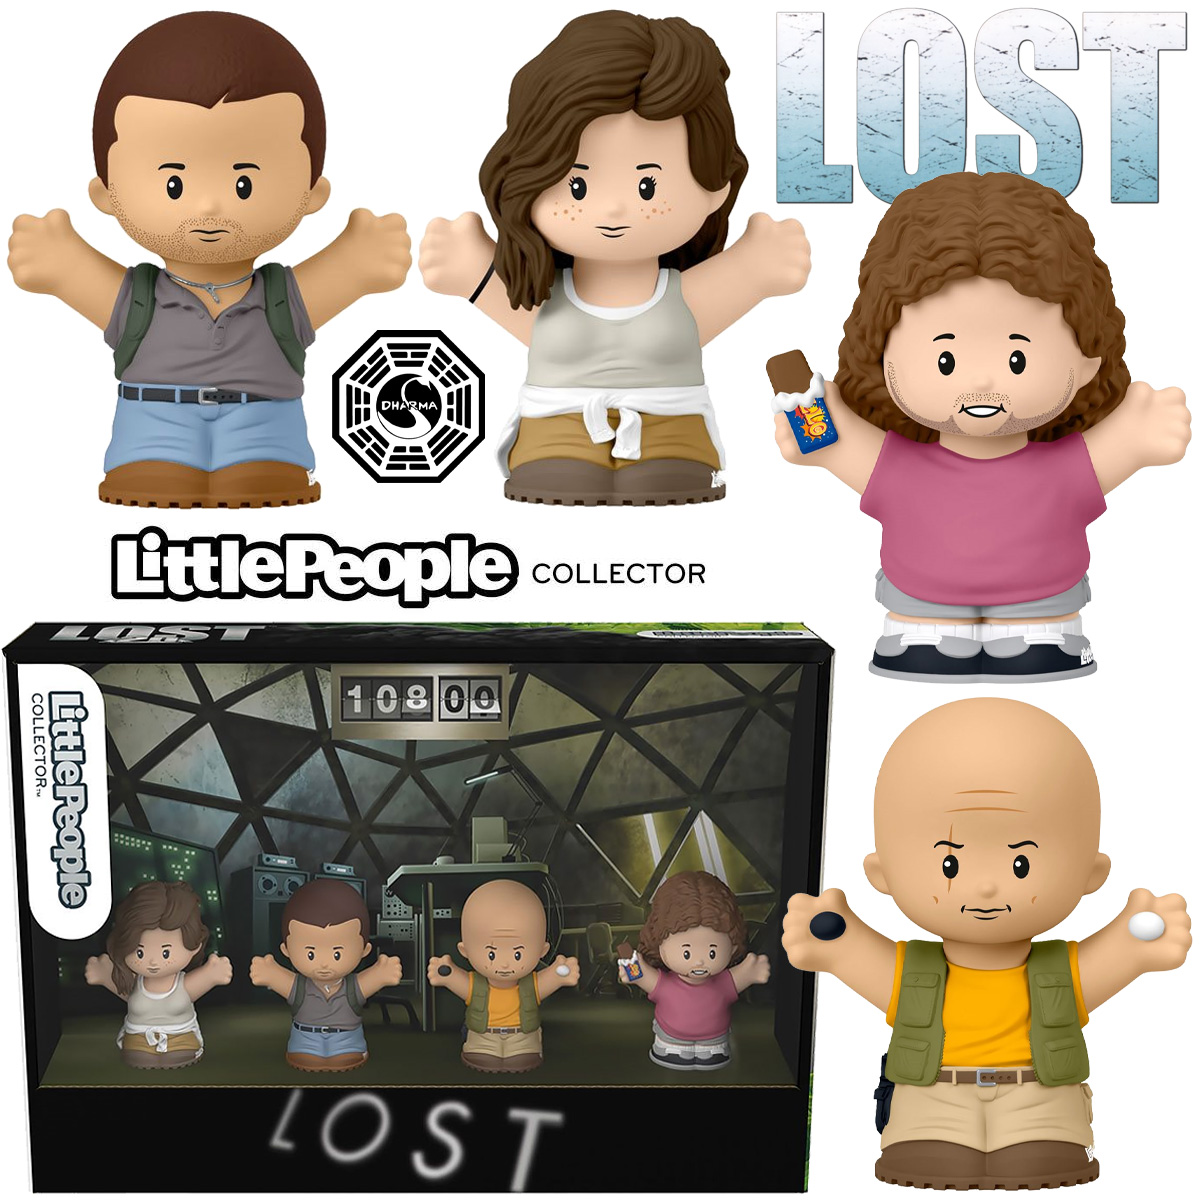 Bonecos Little People Collector LOST